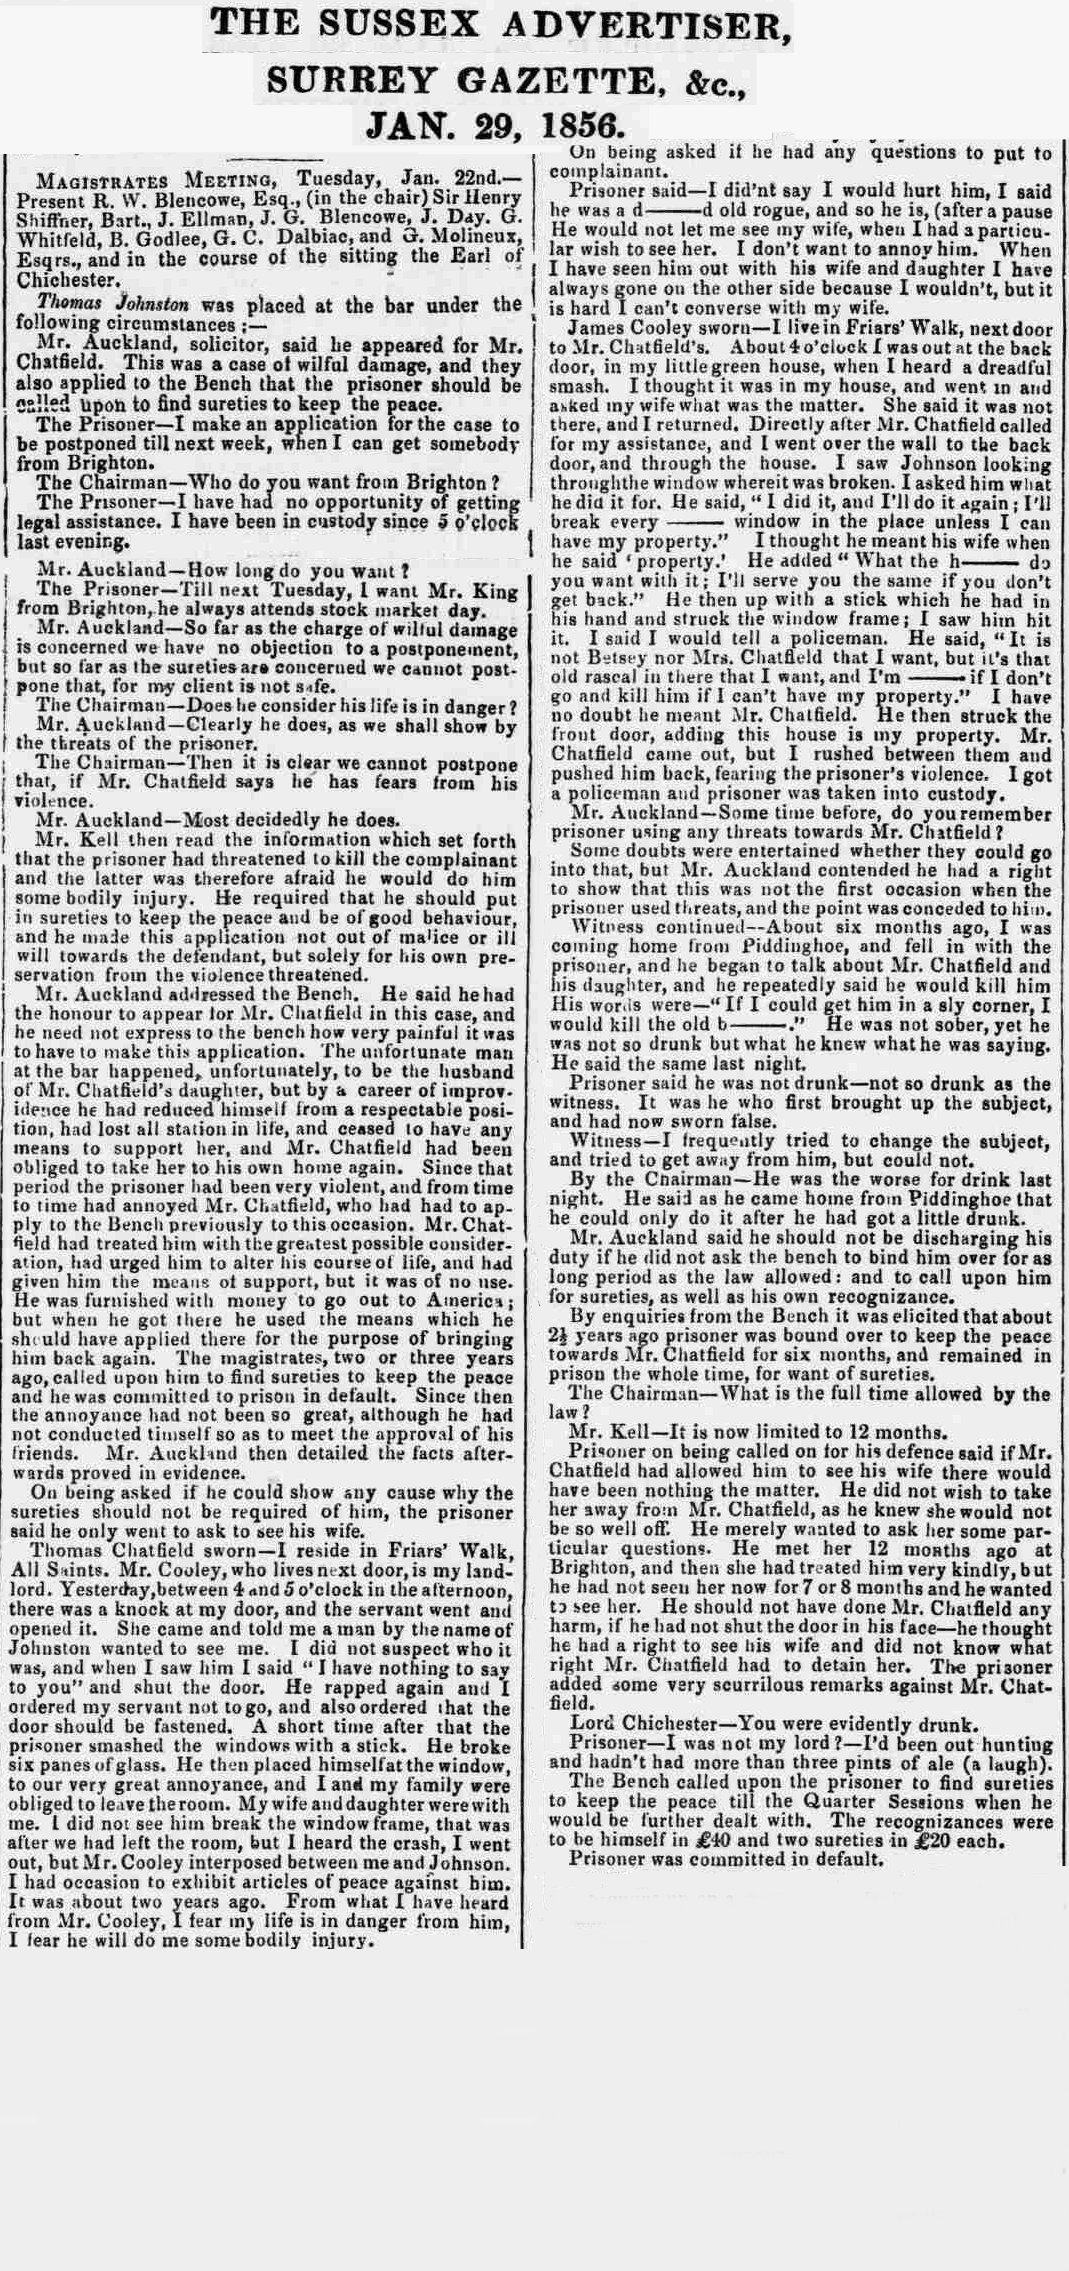 CHATFIELD Thomas 1786-1876 Newspaper article 1856.jpg